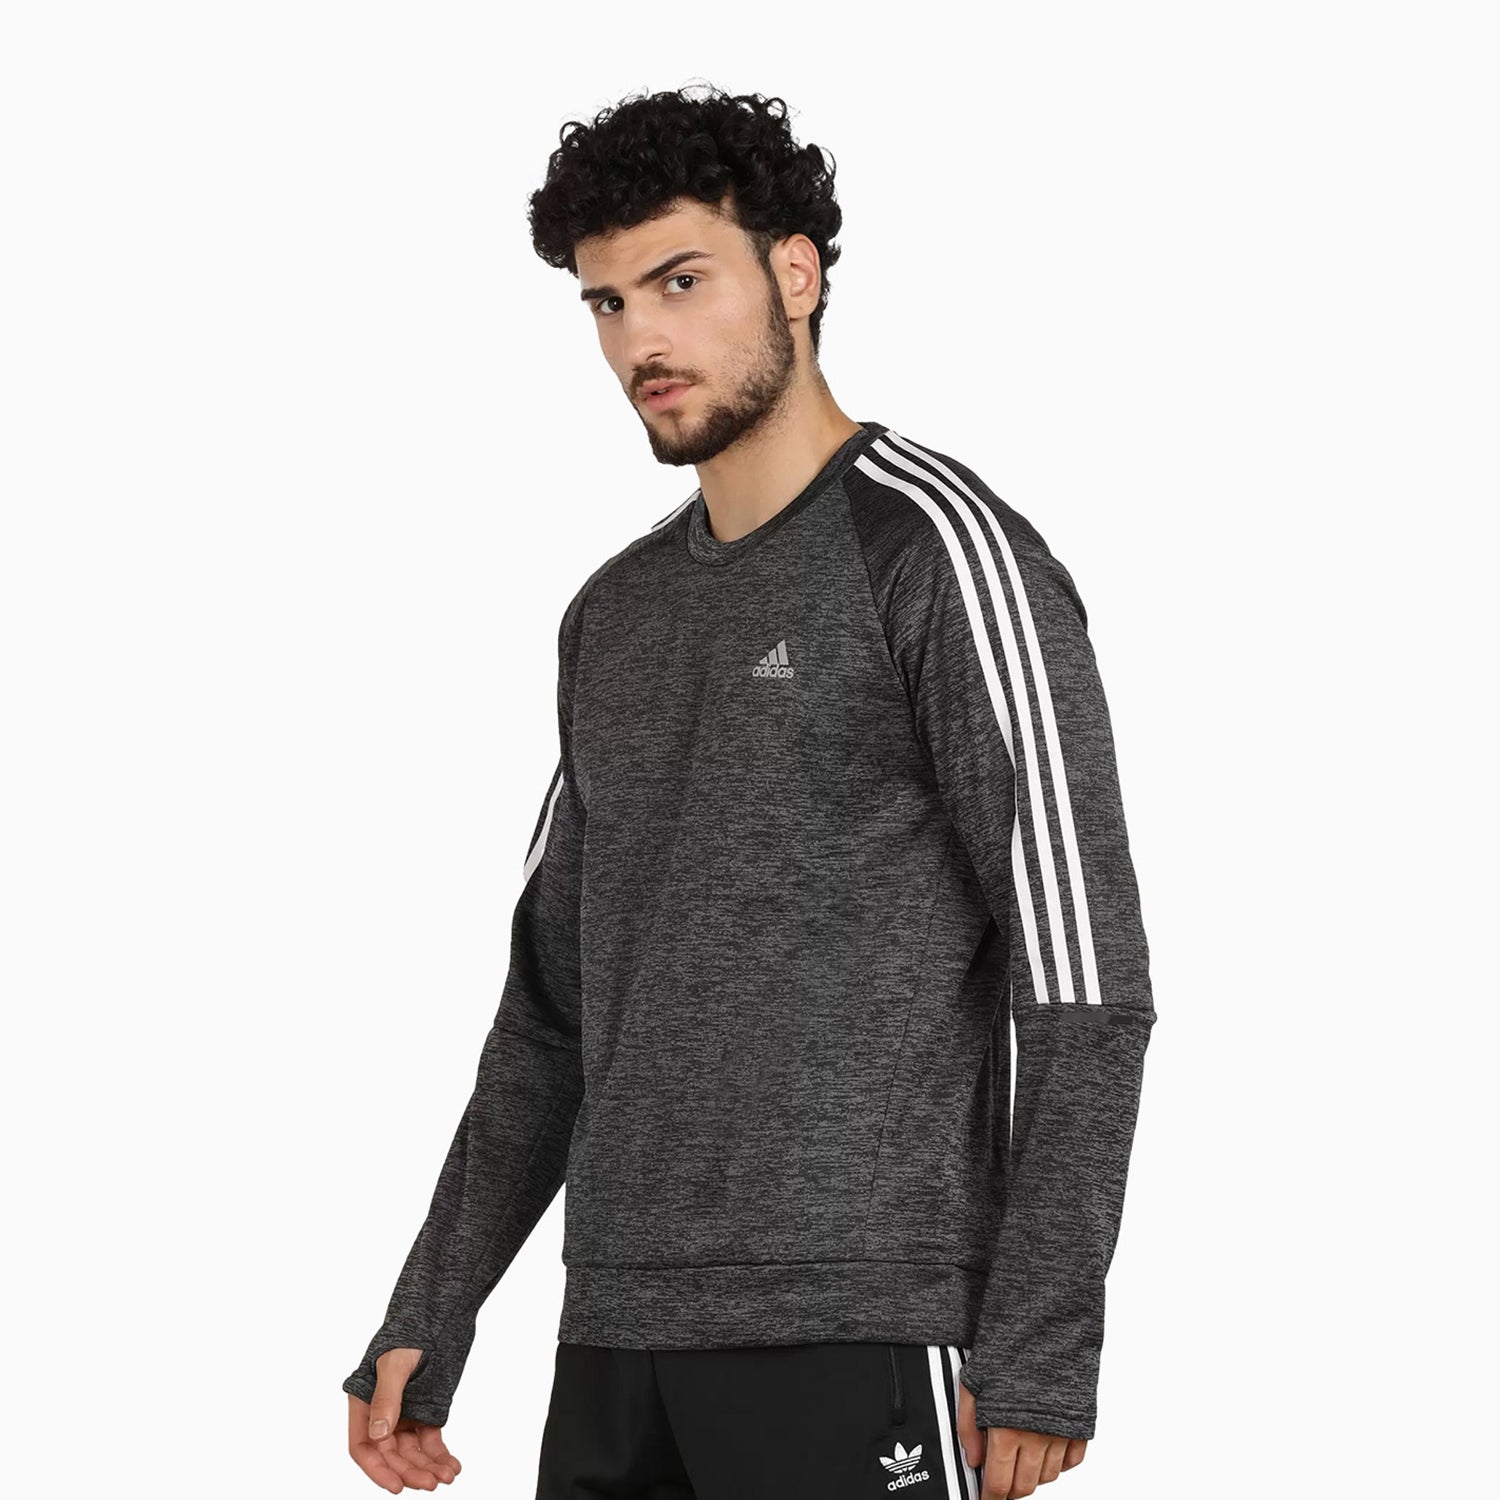 adidas-mens-performance-own-the-run-3-stripes-sweatshirt-dw5993